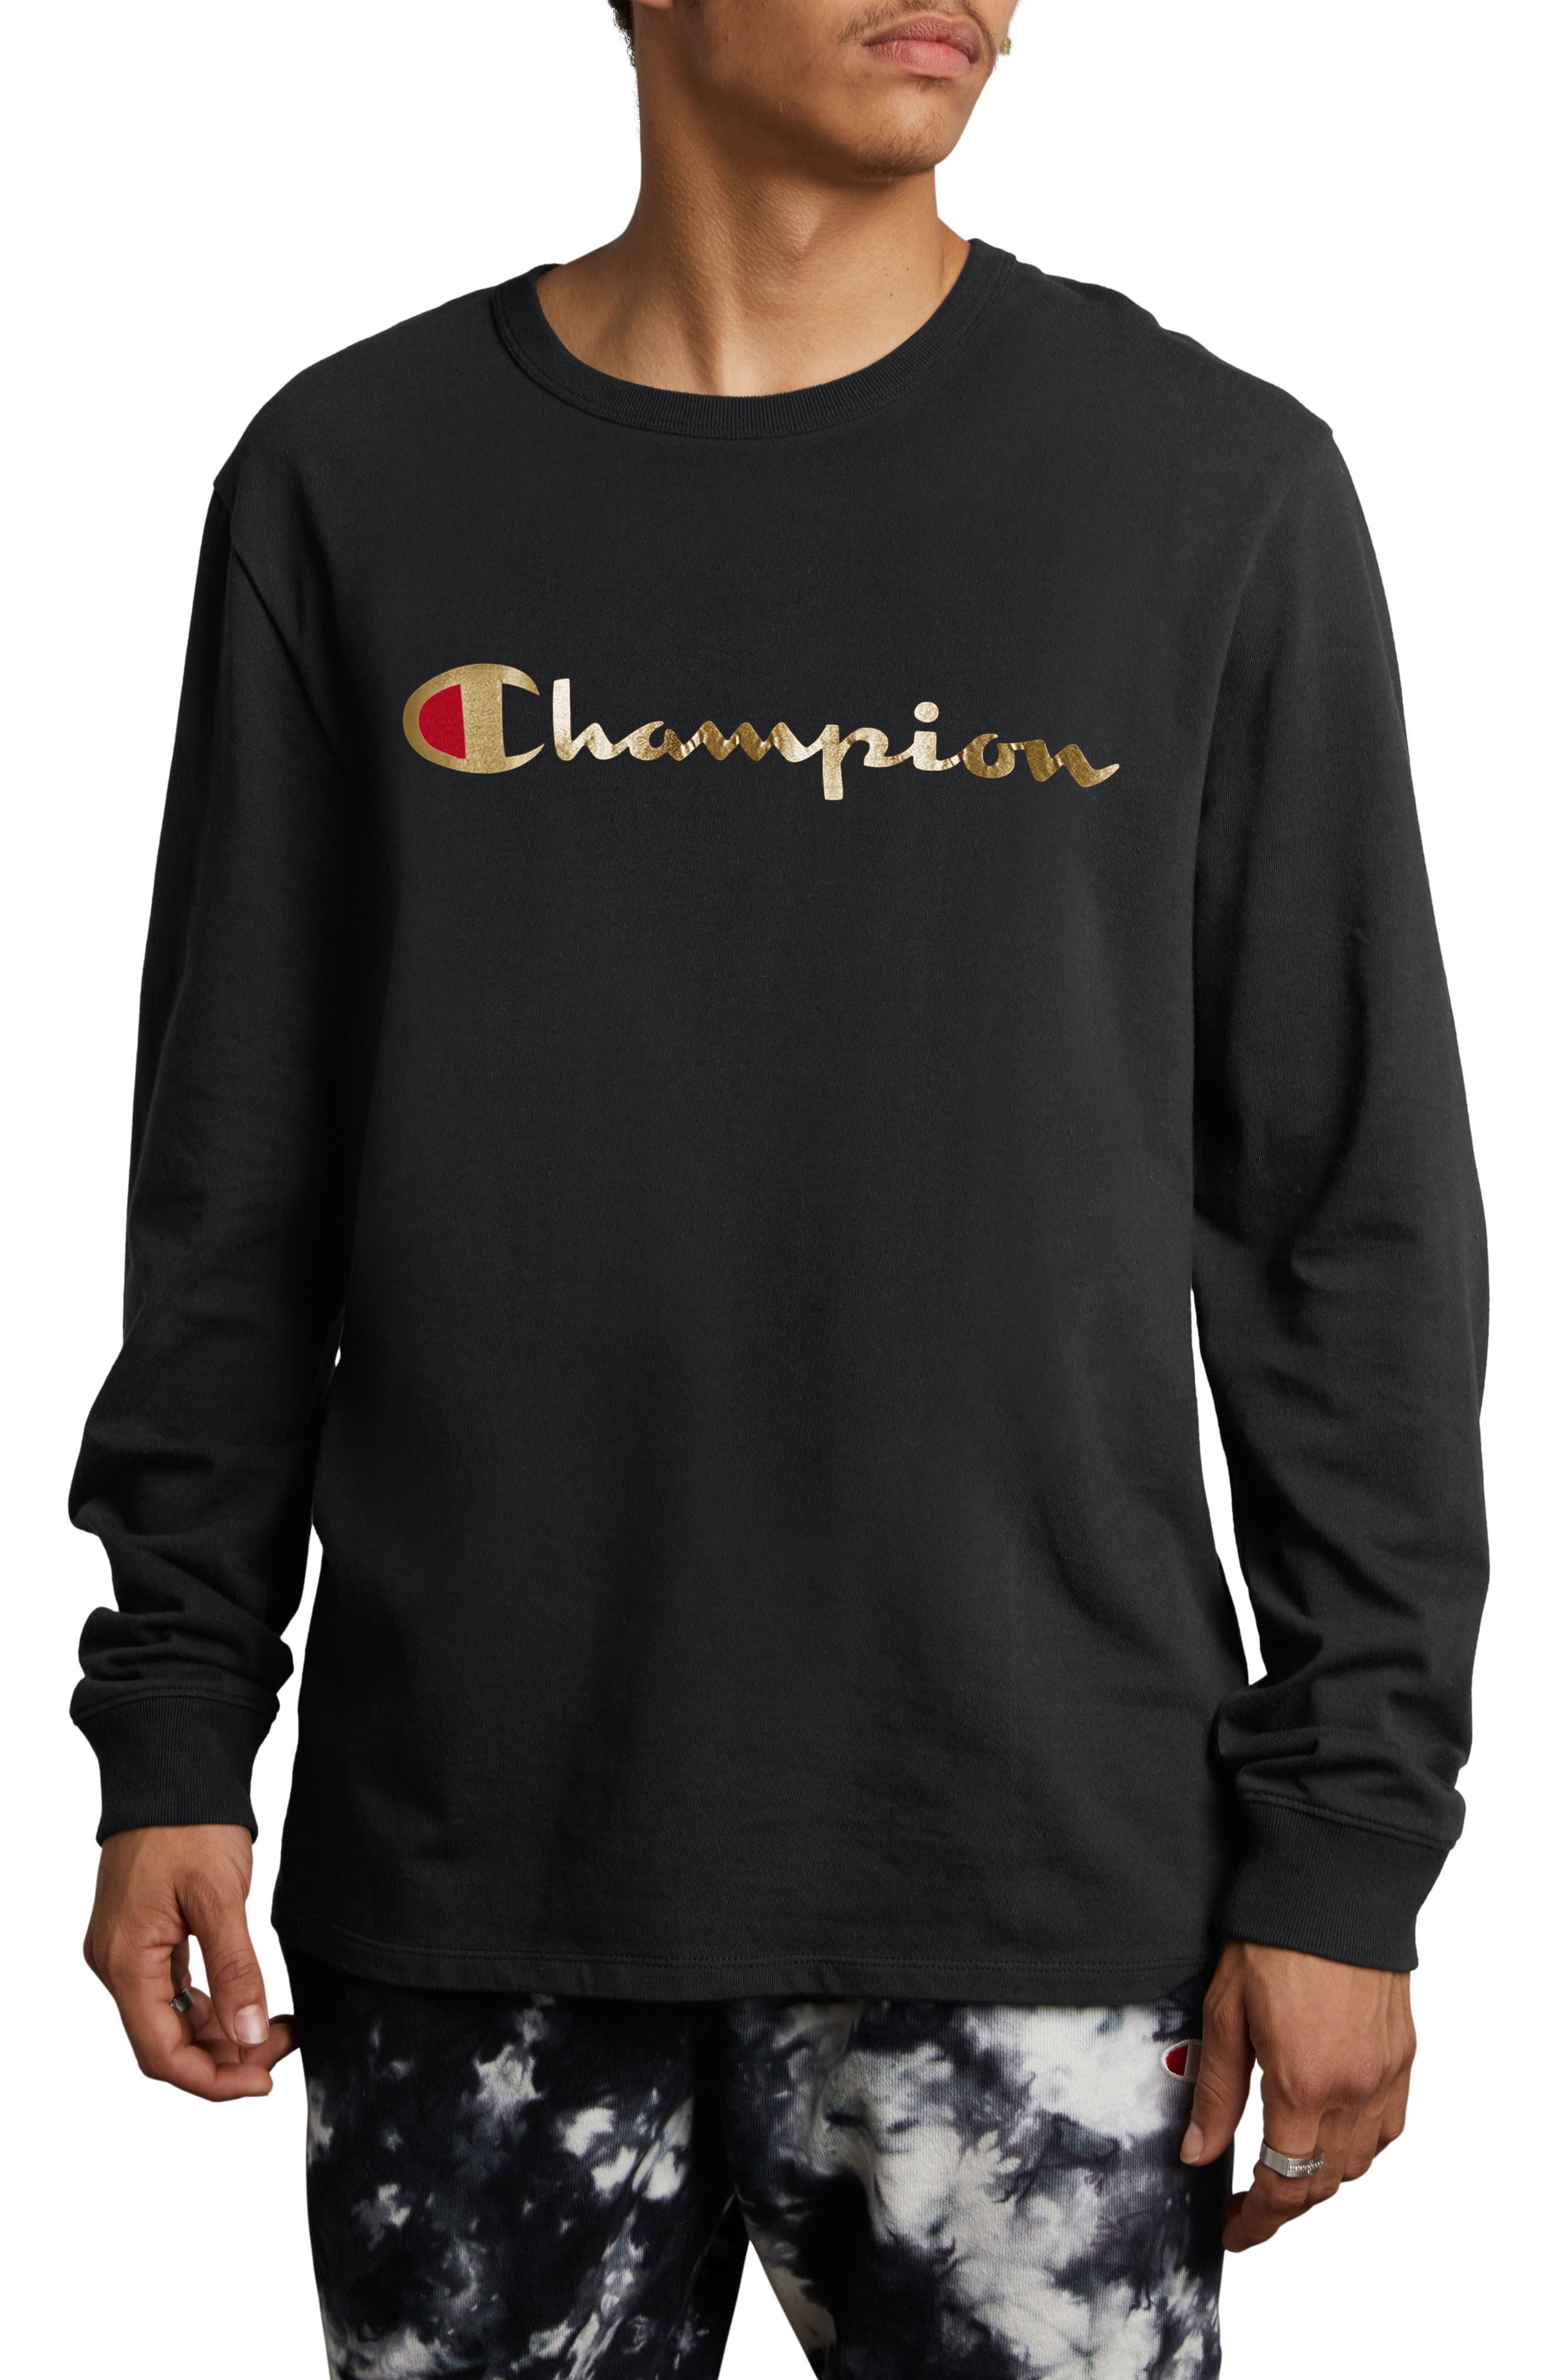 champion black and gold shirt